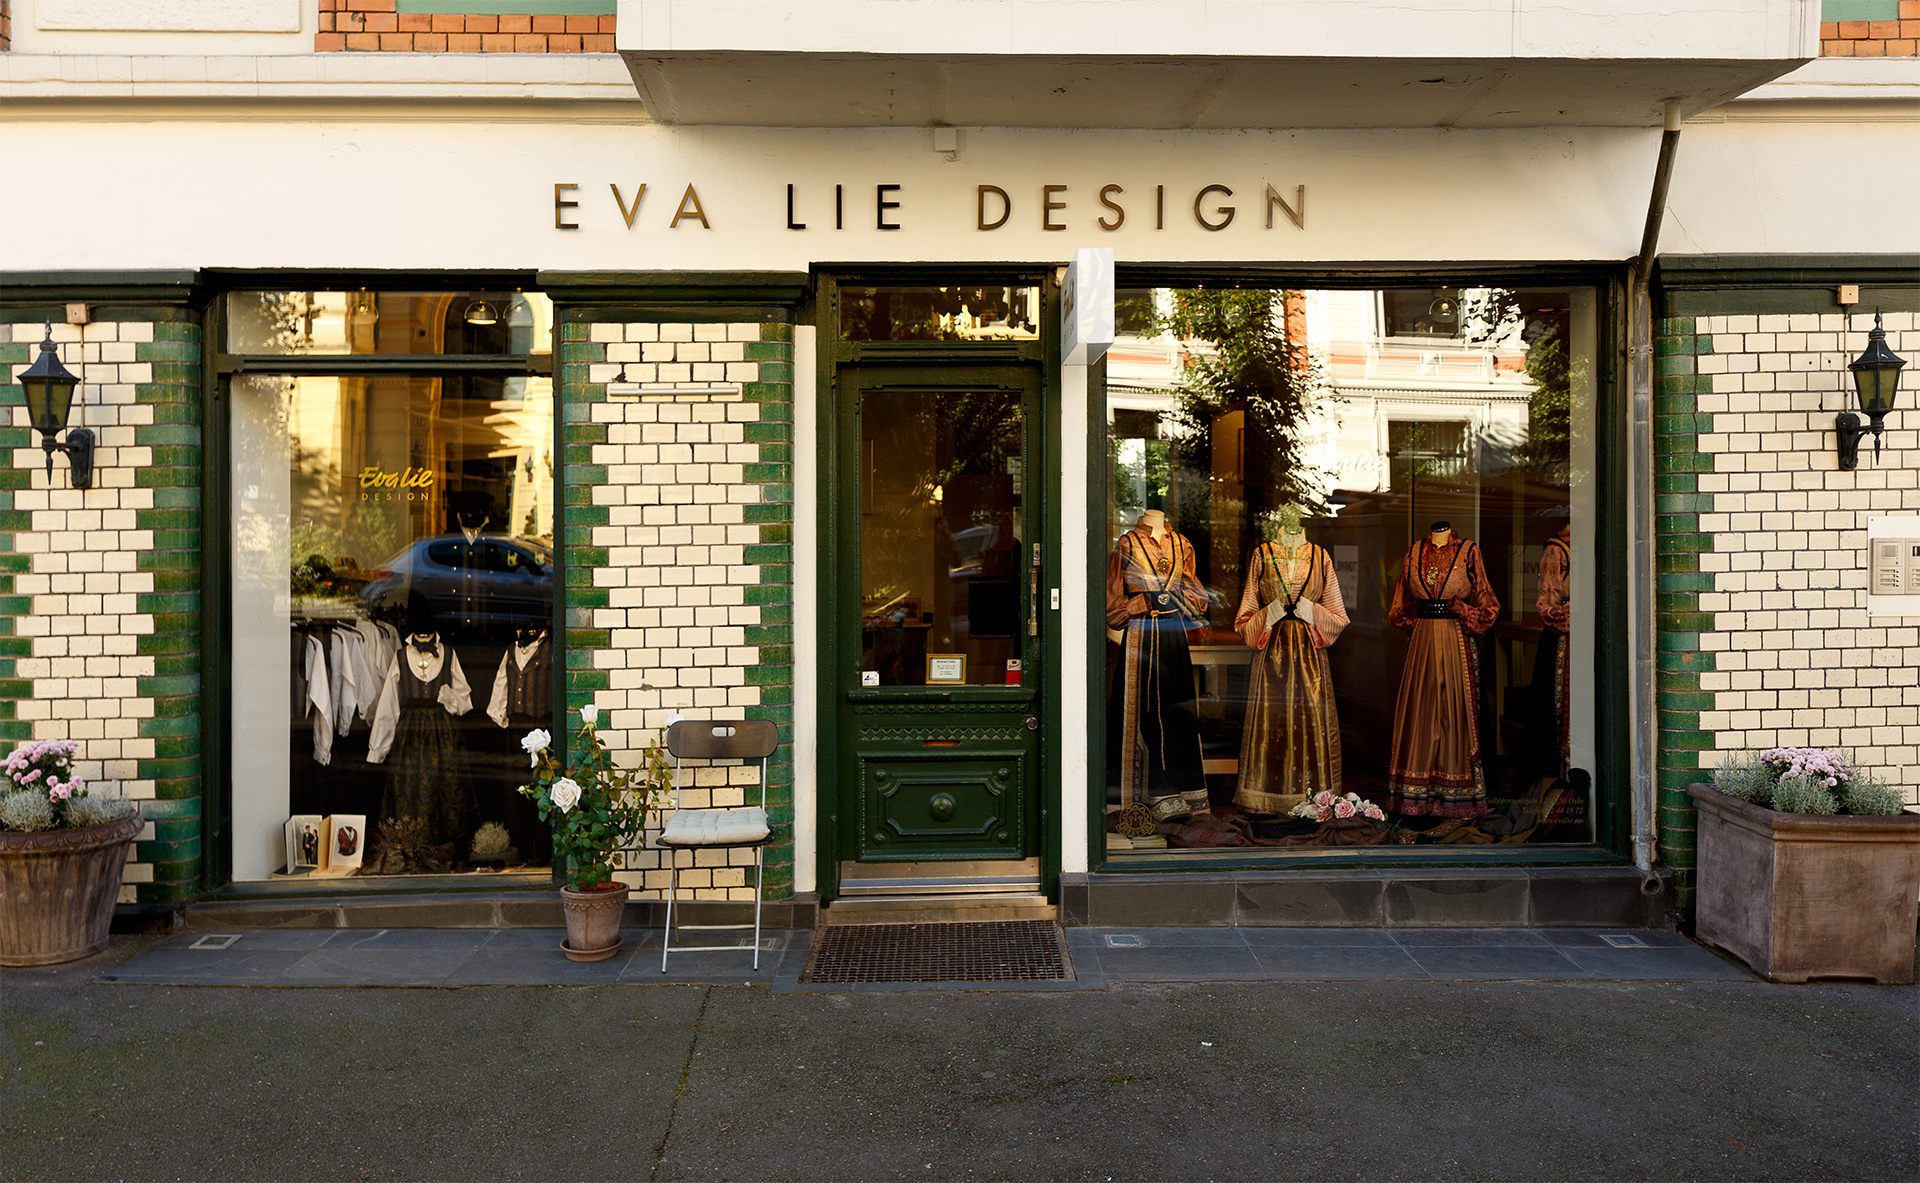 Eva Lie Design butikken